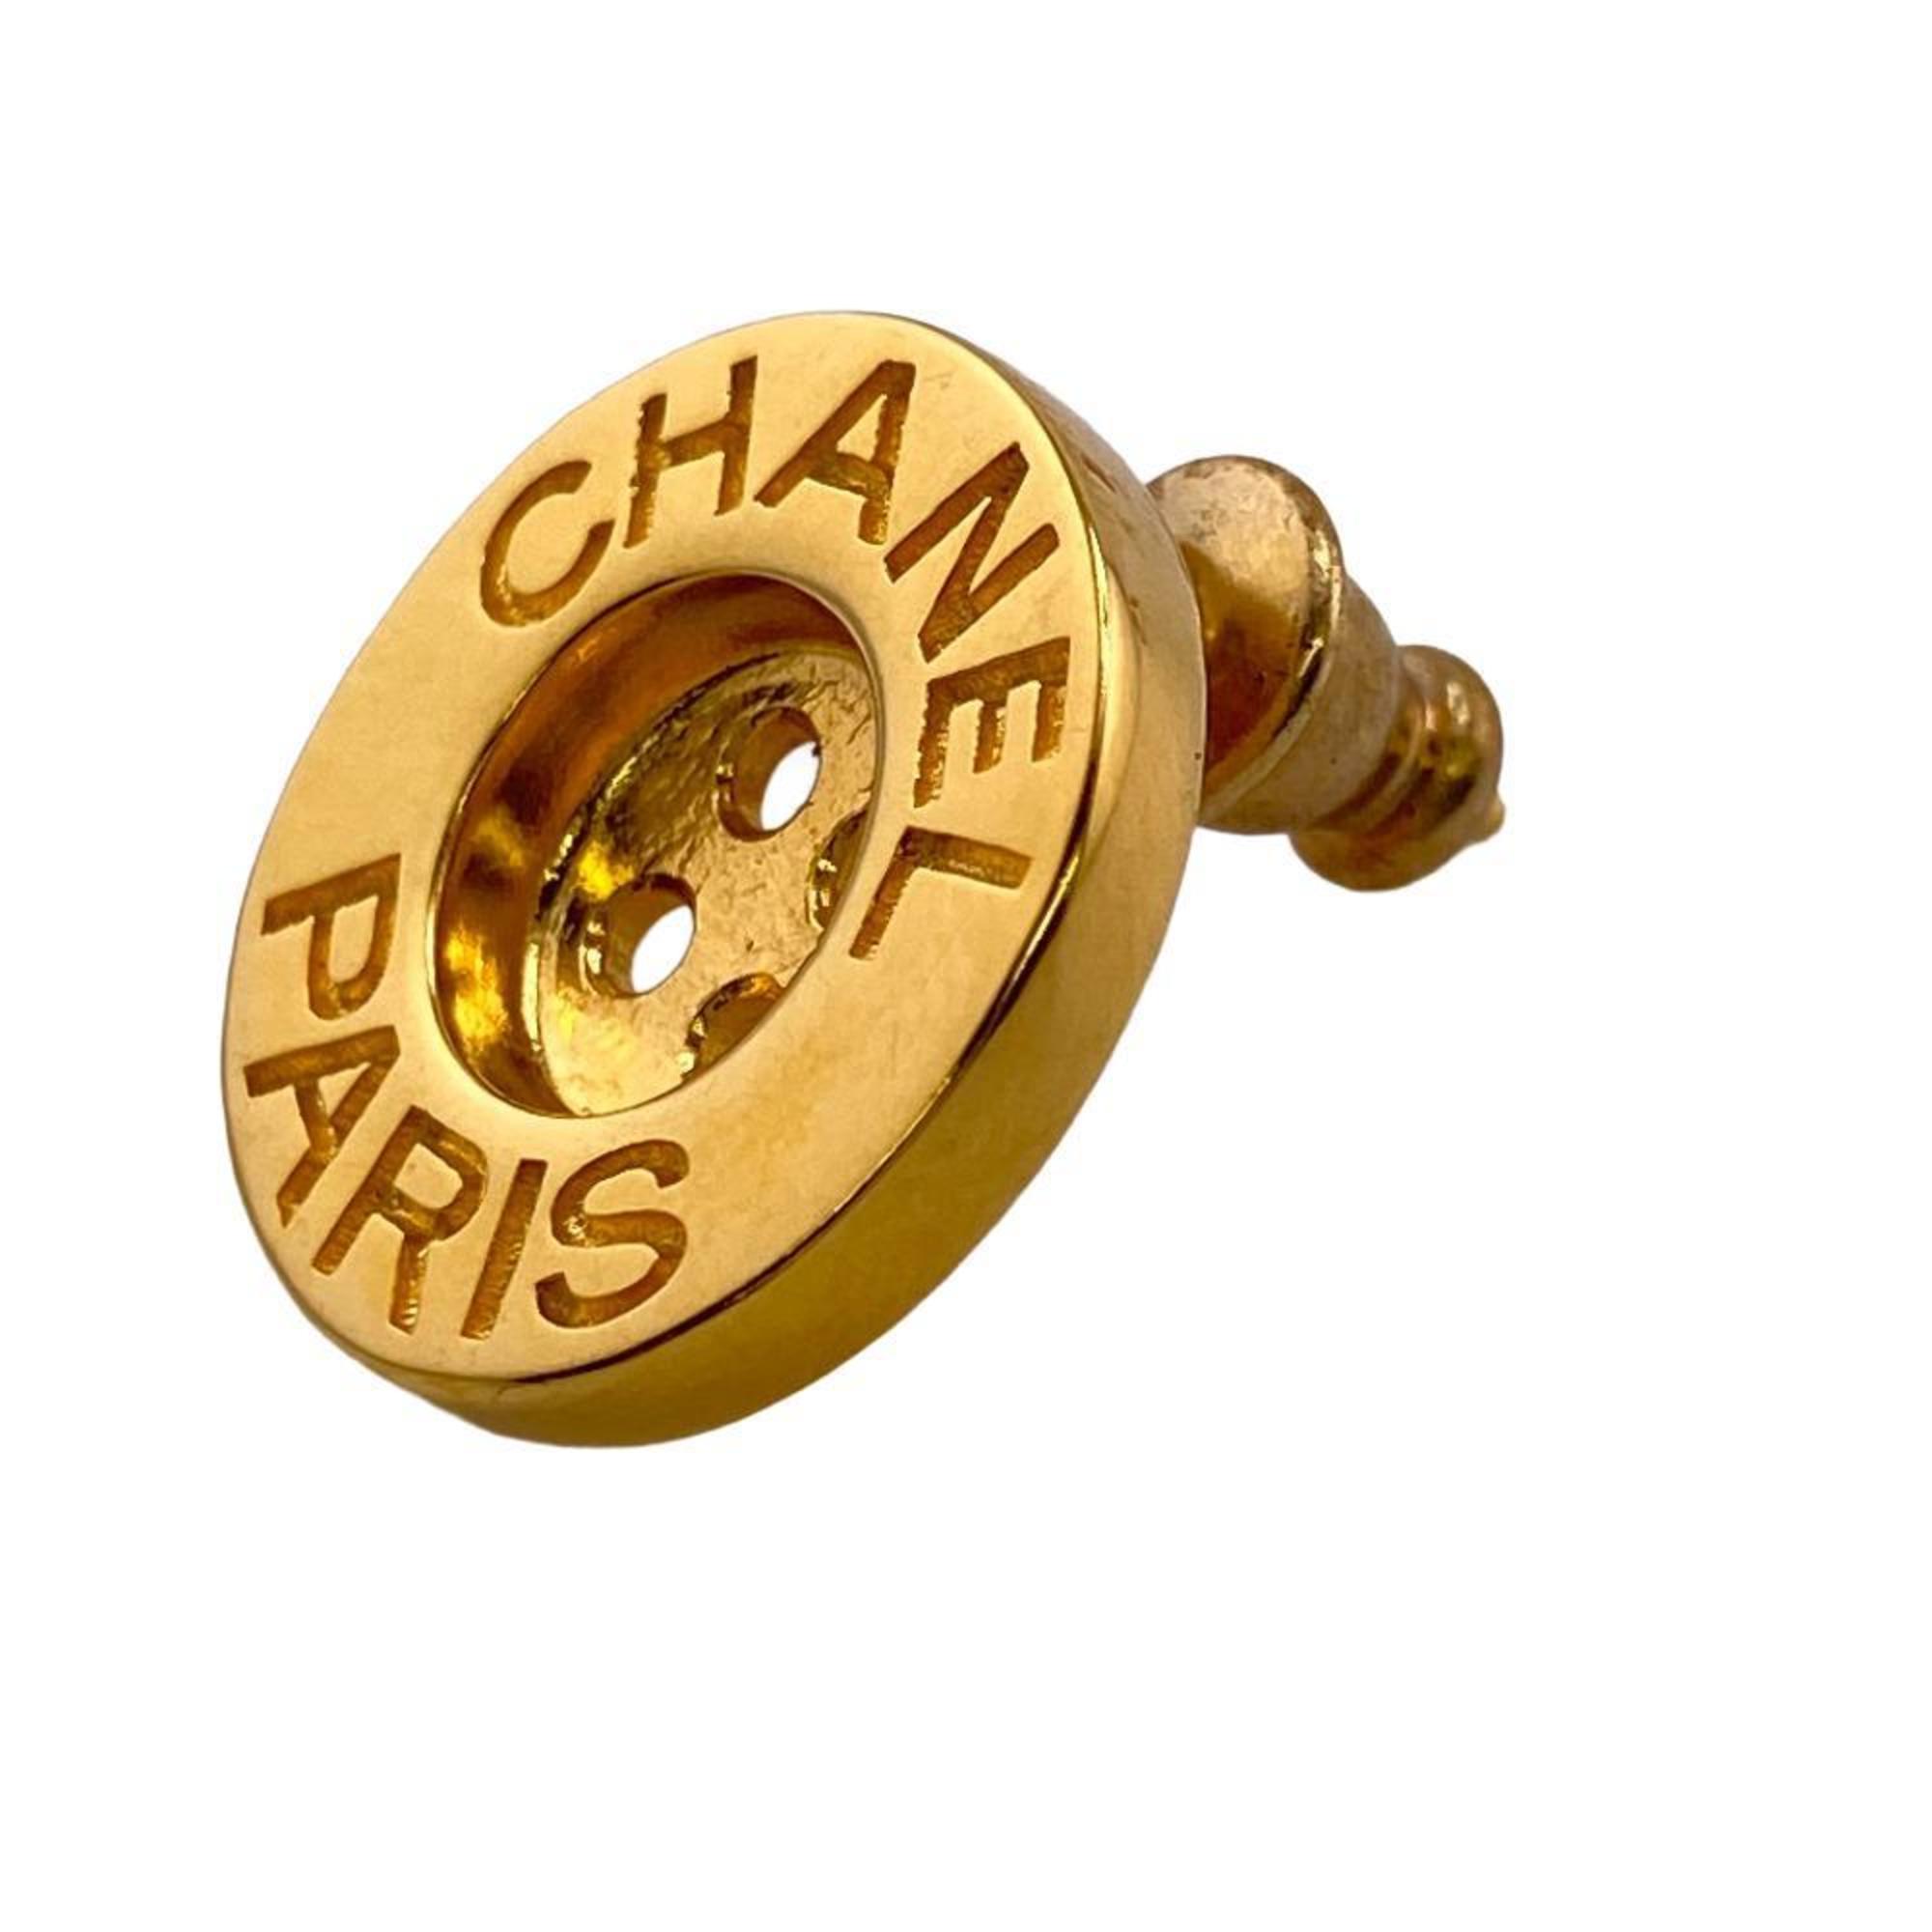 CHANEL 820A button motif earrings gold ladies